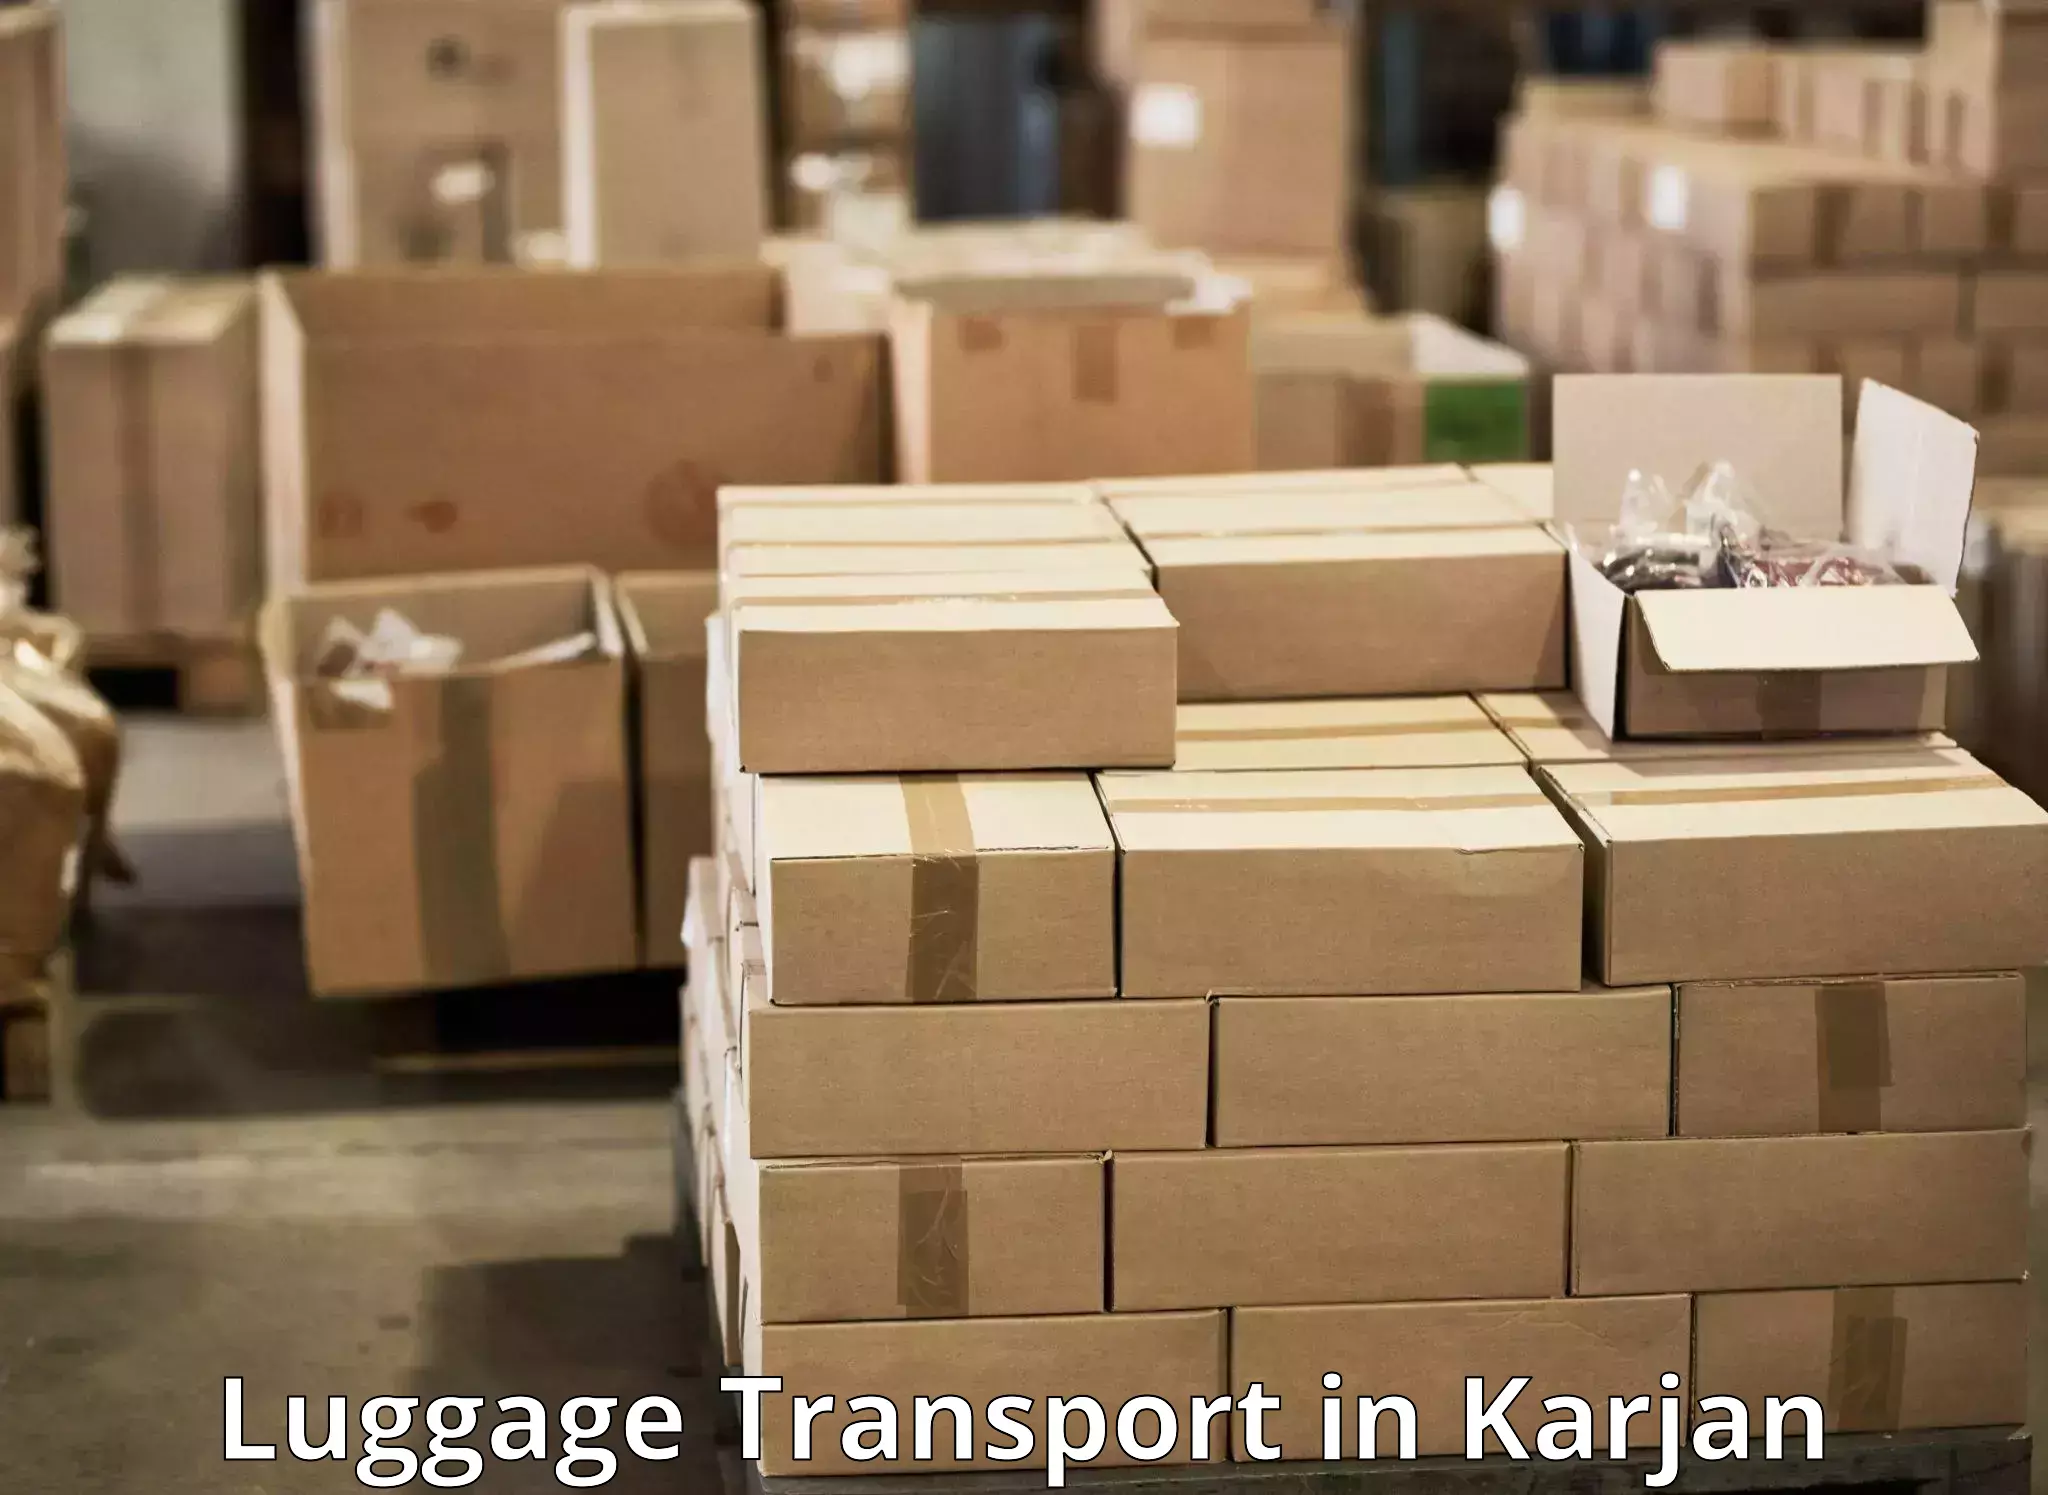 Domestic luggage transport in Karjan